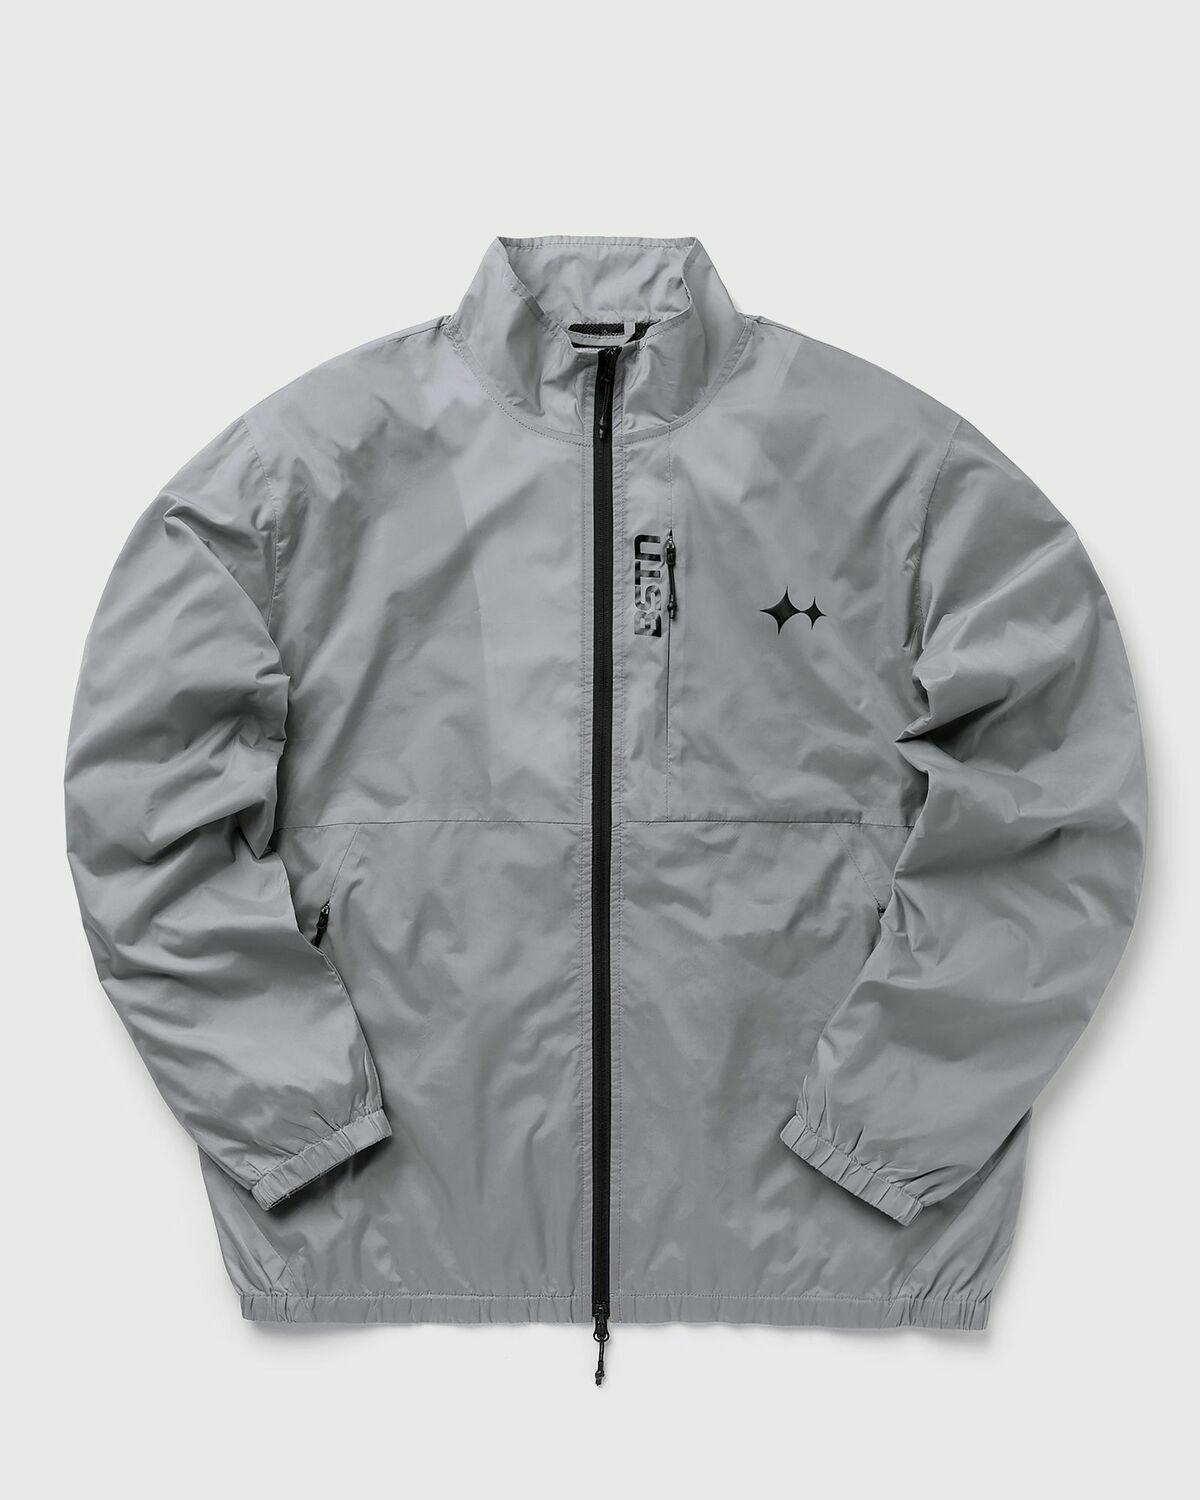 Bstn Brand Track Jacket Grey - Mens - Track Jackets